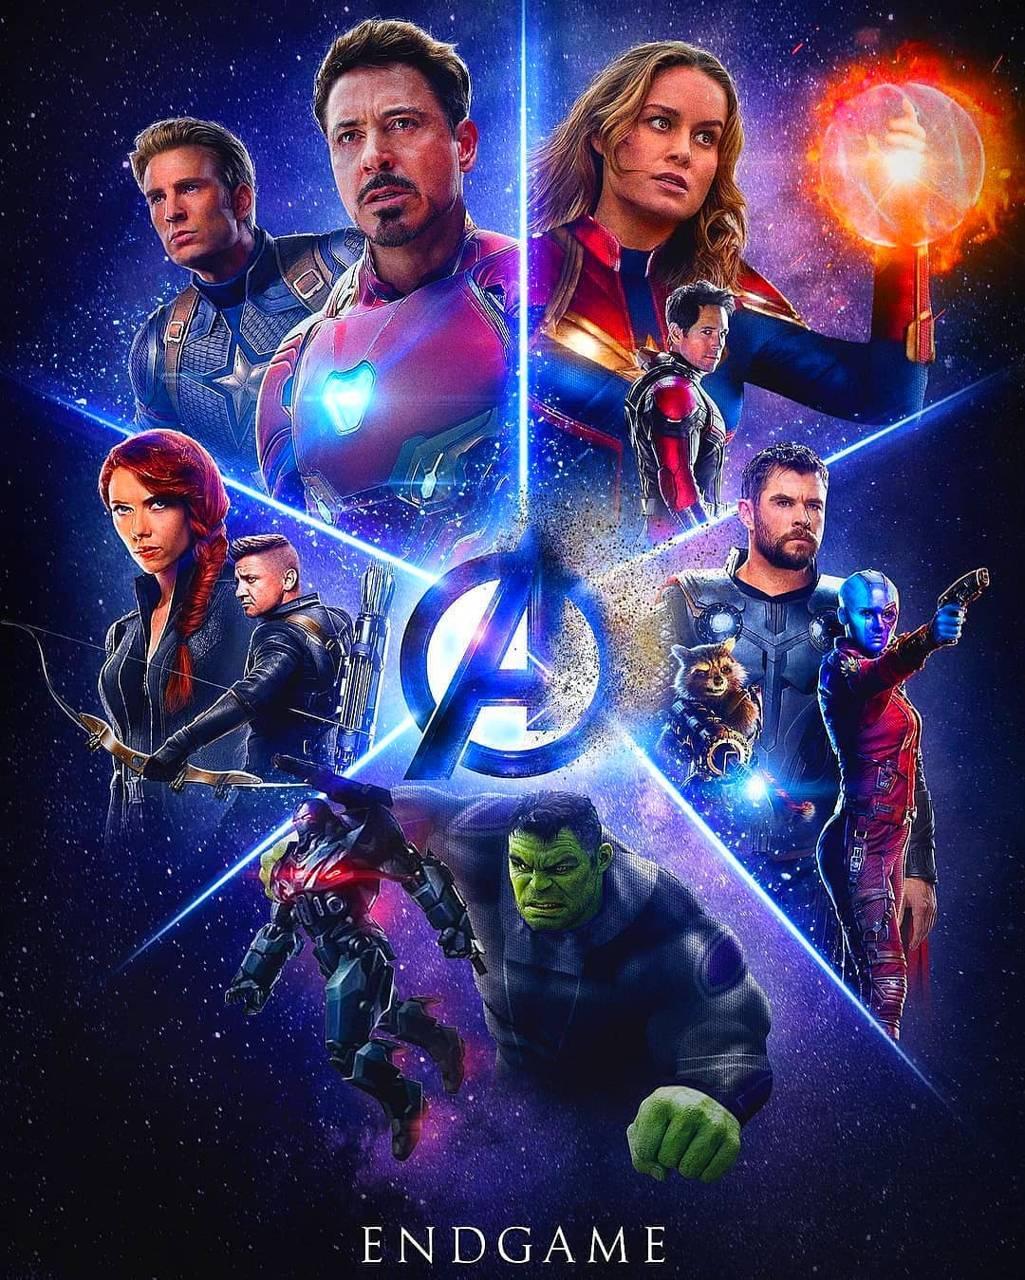 Avengers Endgame Superheroes Wallpaper HD 2019 for Android